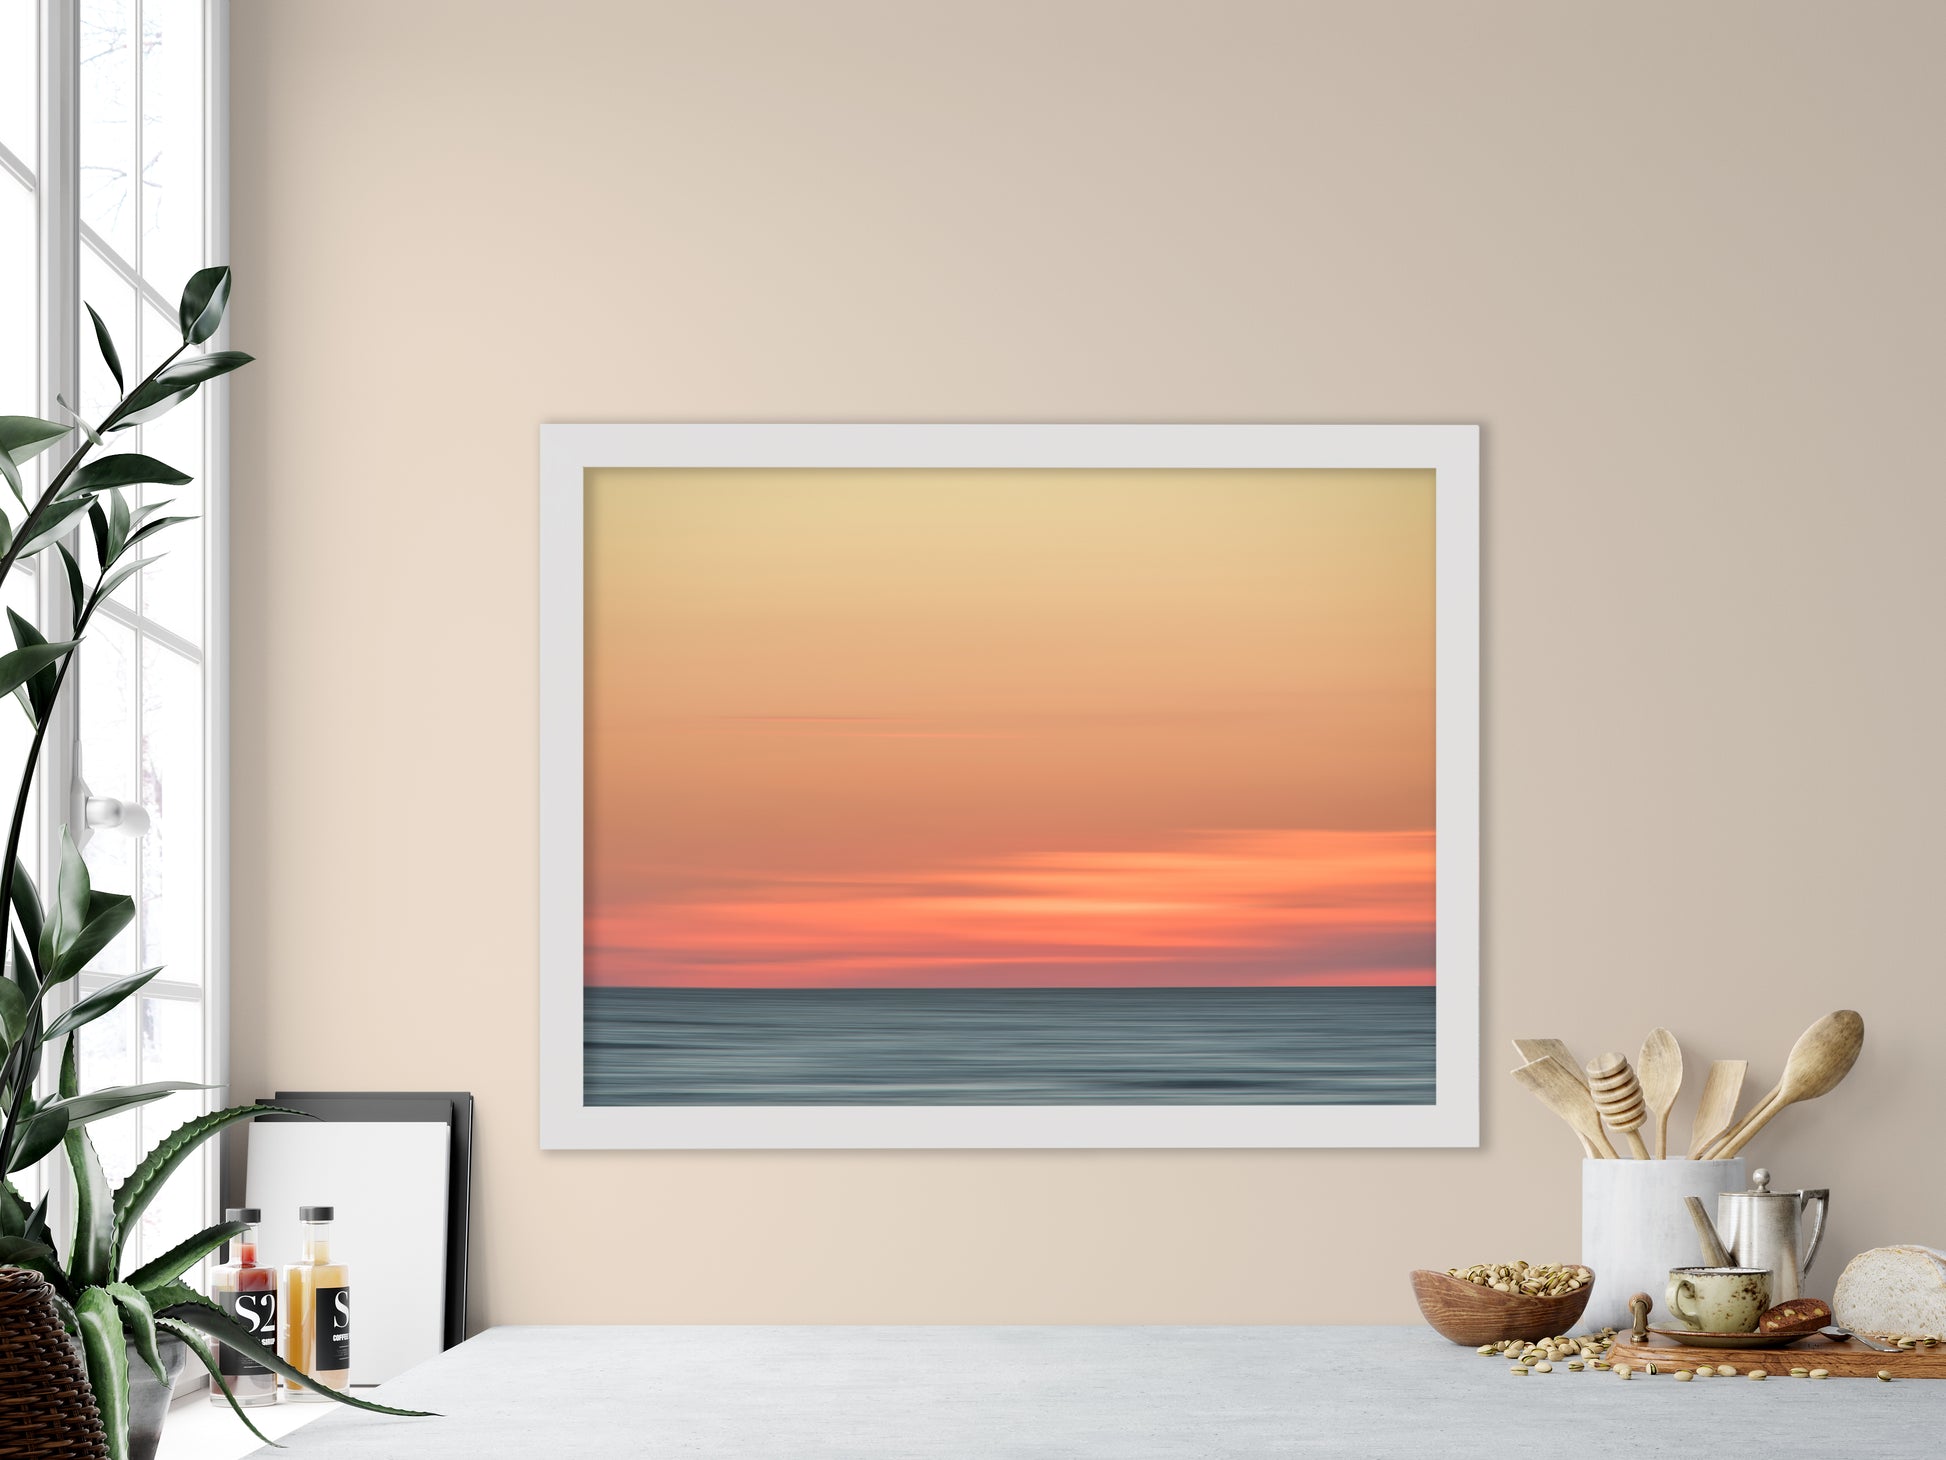 kitchen wall accents, Pink Coastal Wall Art: Abstract Color Blend Ocean Sunset - Coastal / Beach / Seascape / Nature / Landscape Photo Framed Wall Art Print - Artwork - Wall Decor